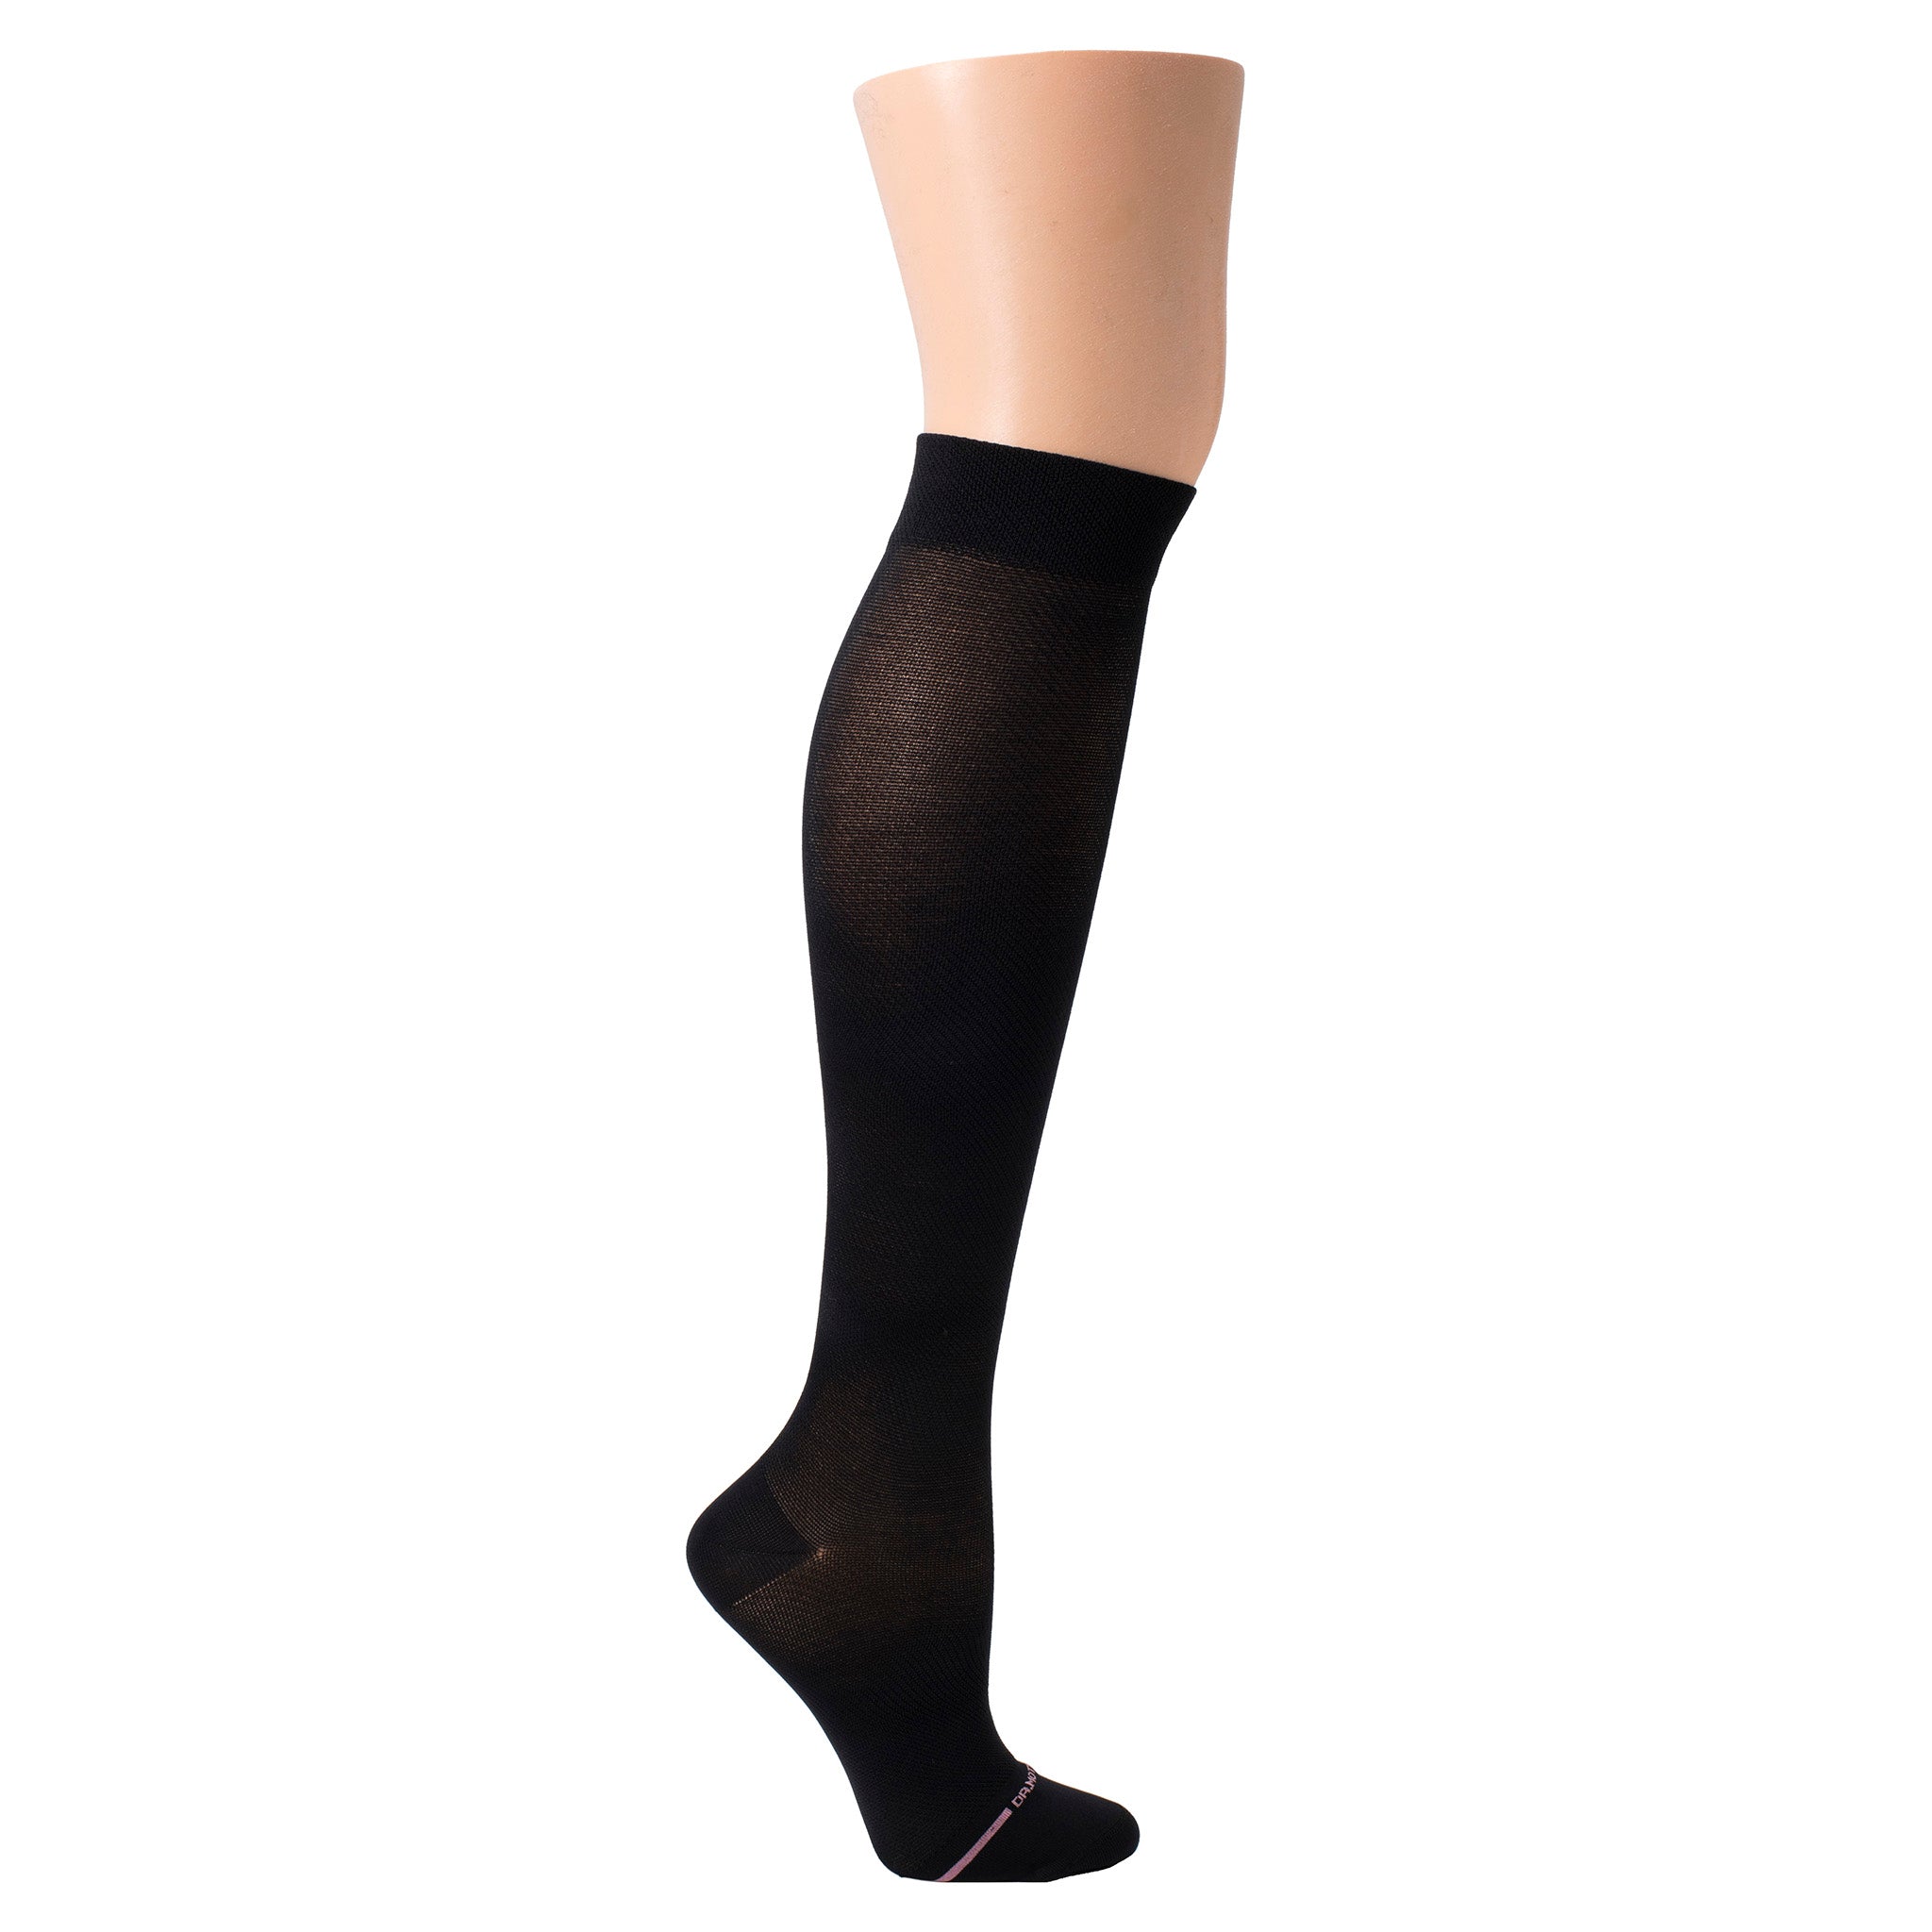 Dr. Comfort® Microfiber Medical Compression Stockings, Women's